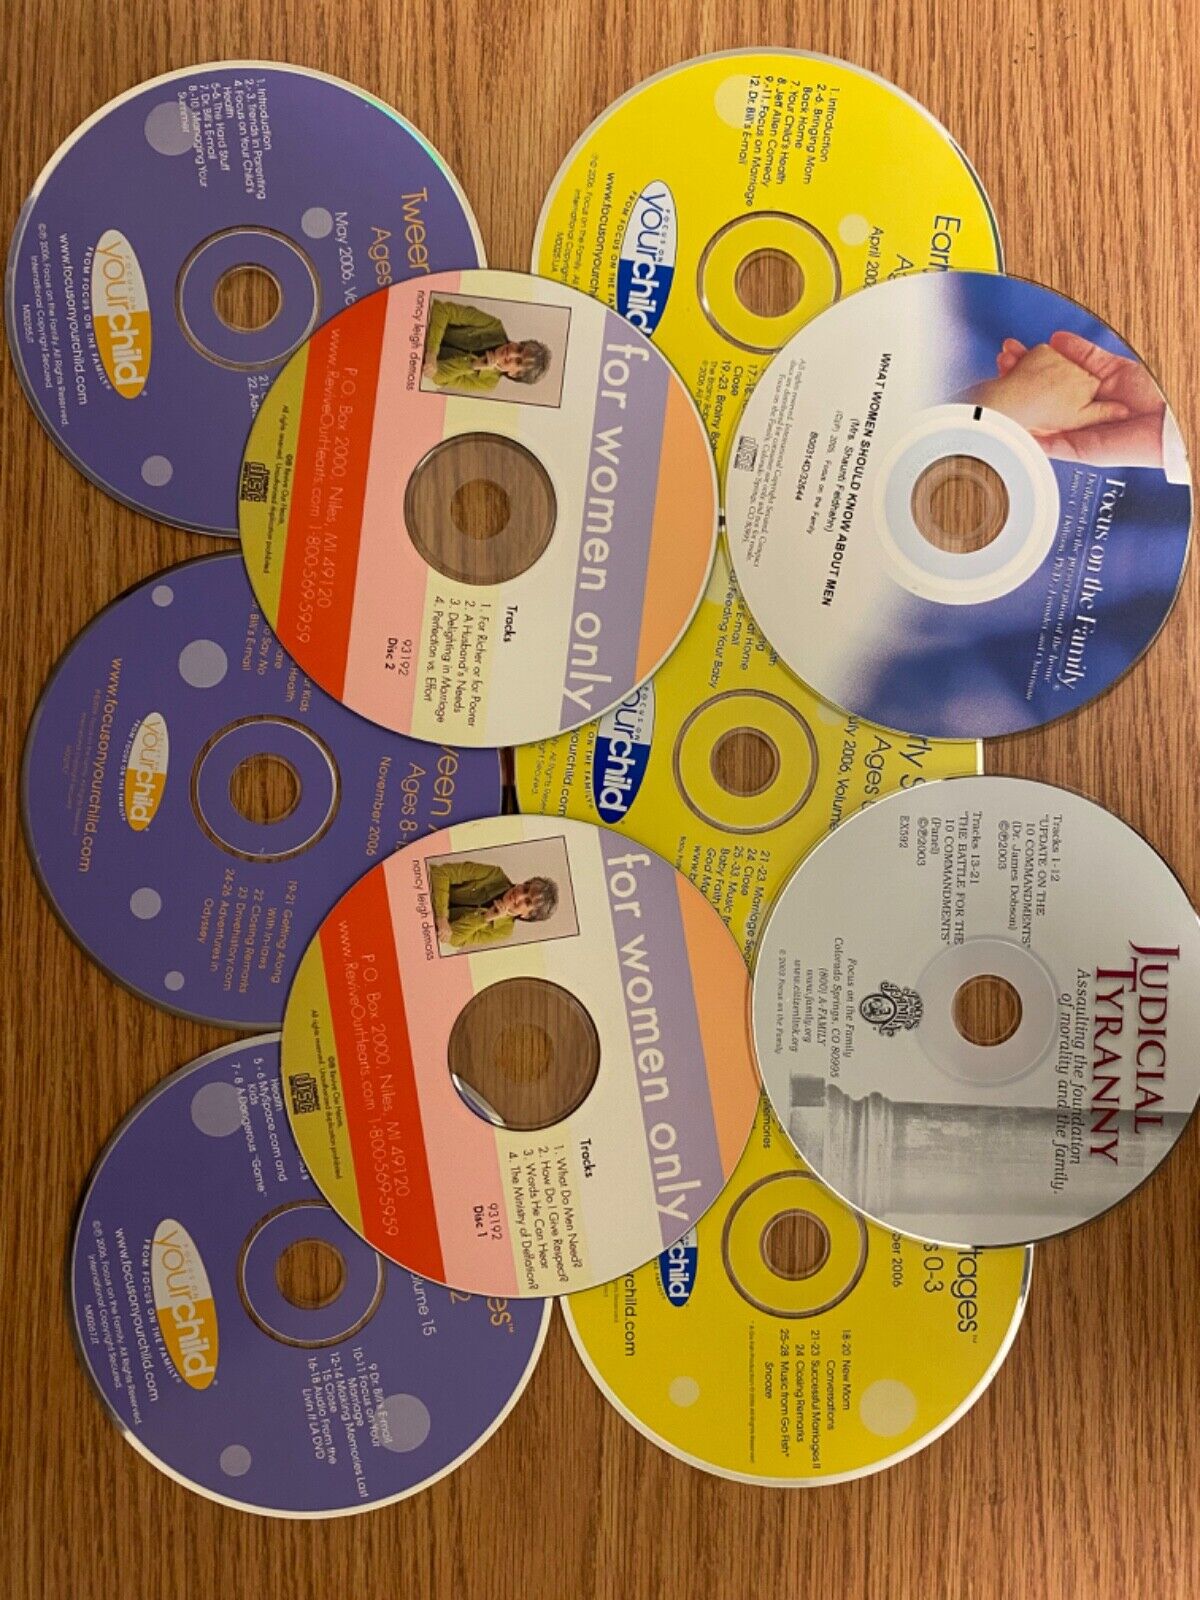 Lot of 10 christian cds